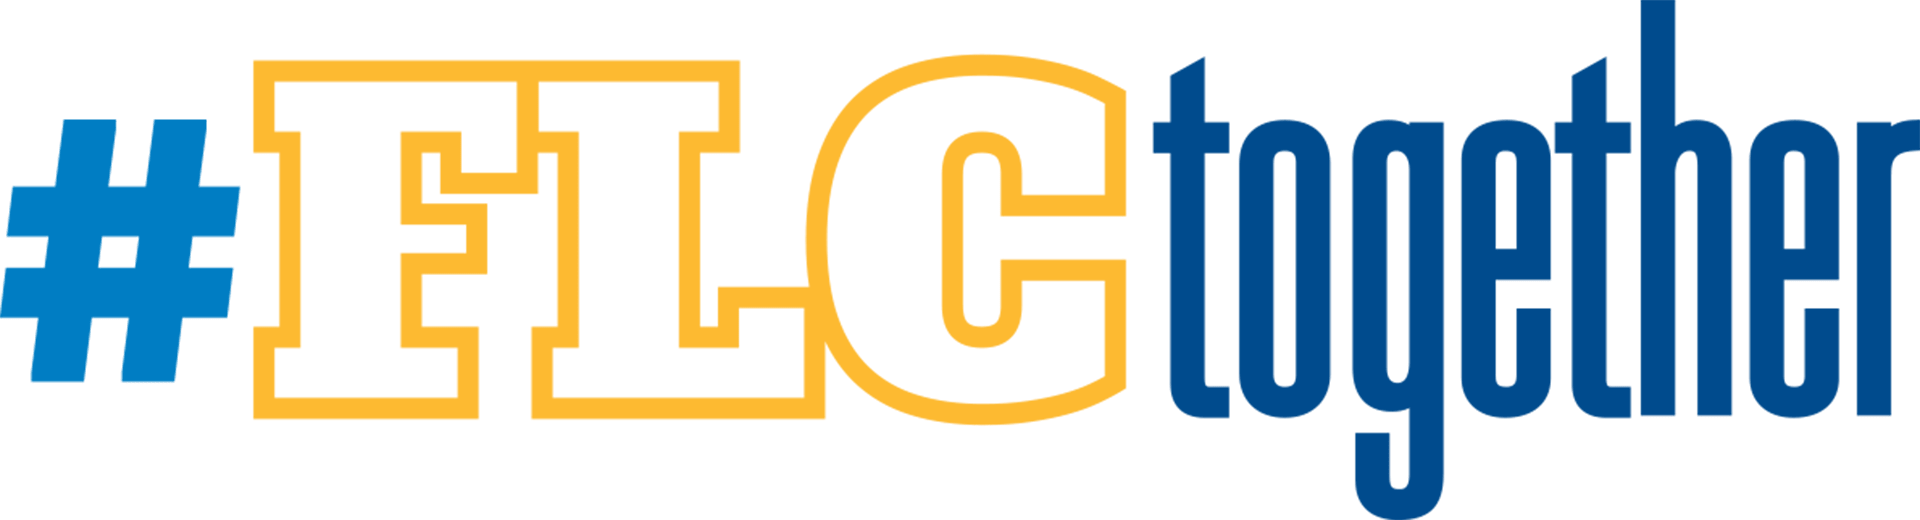 Hashtag FLC Together logo